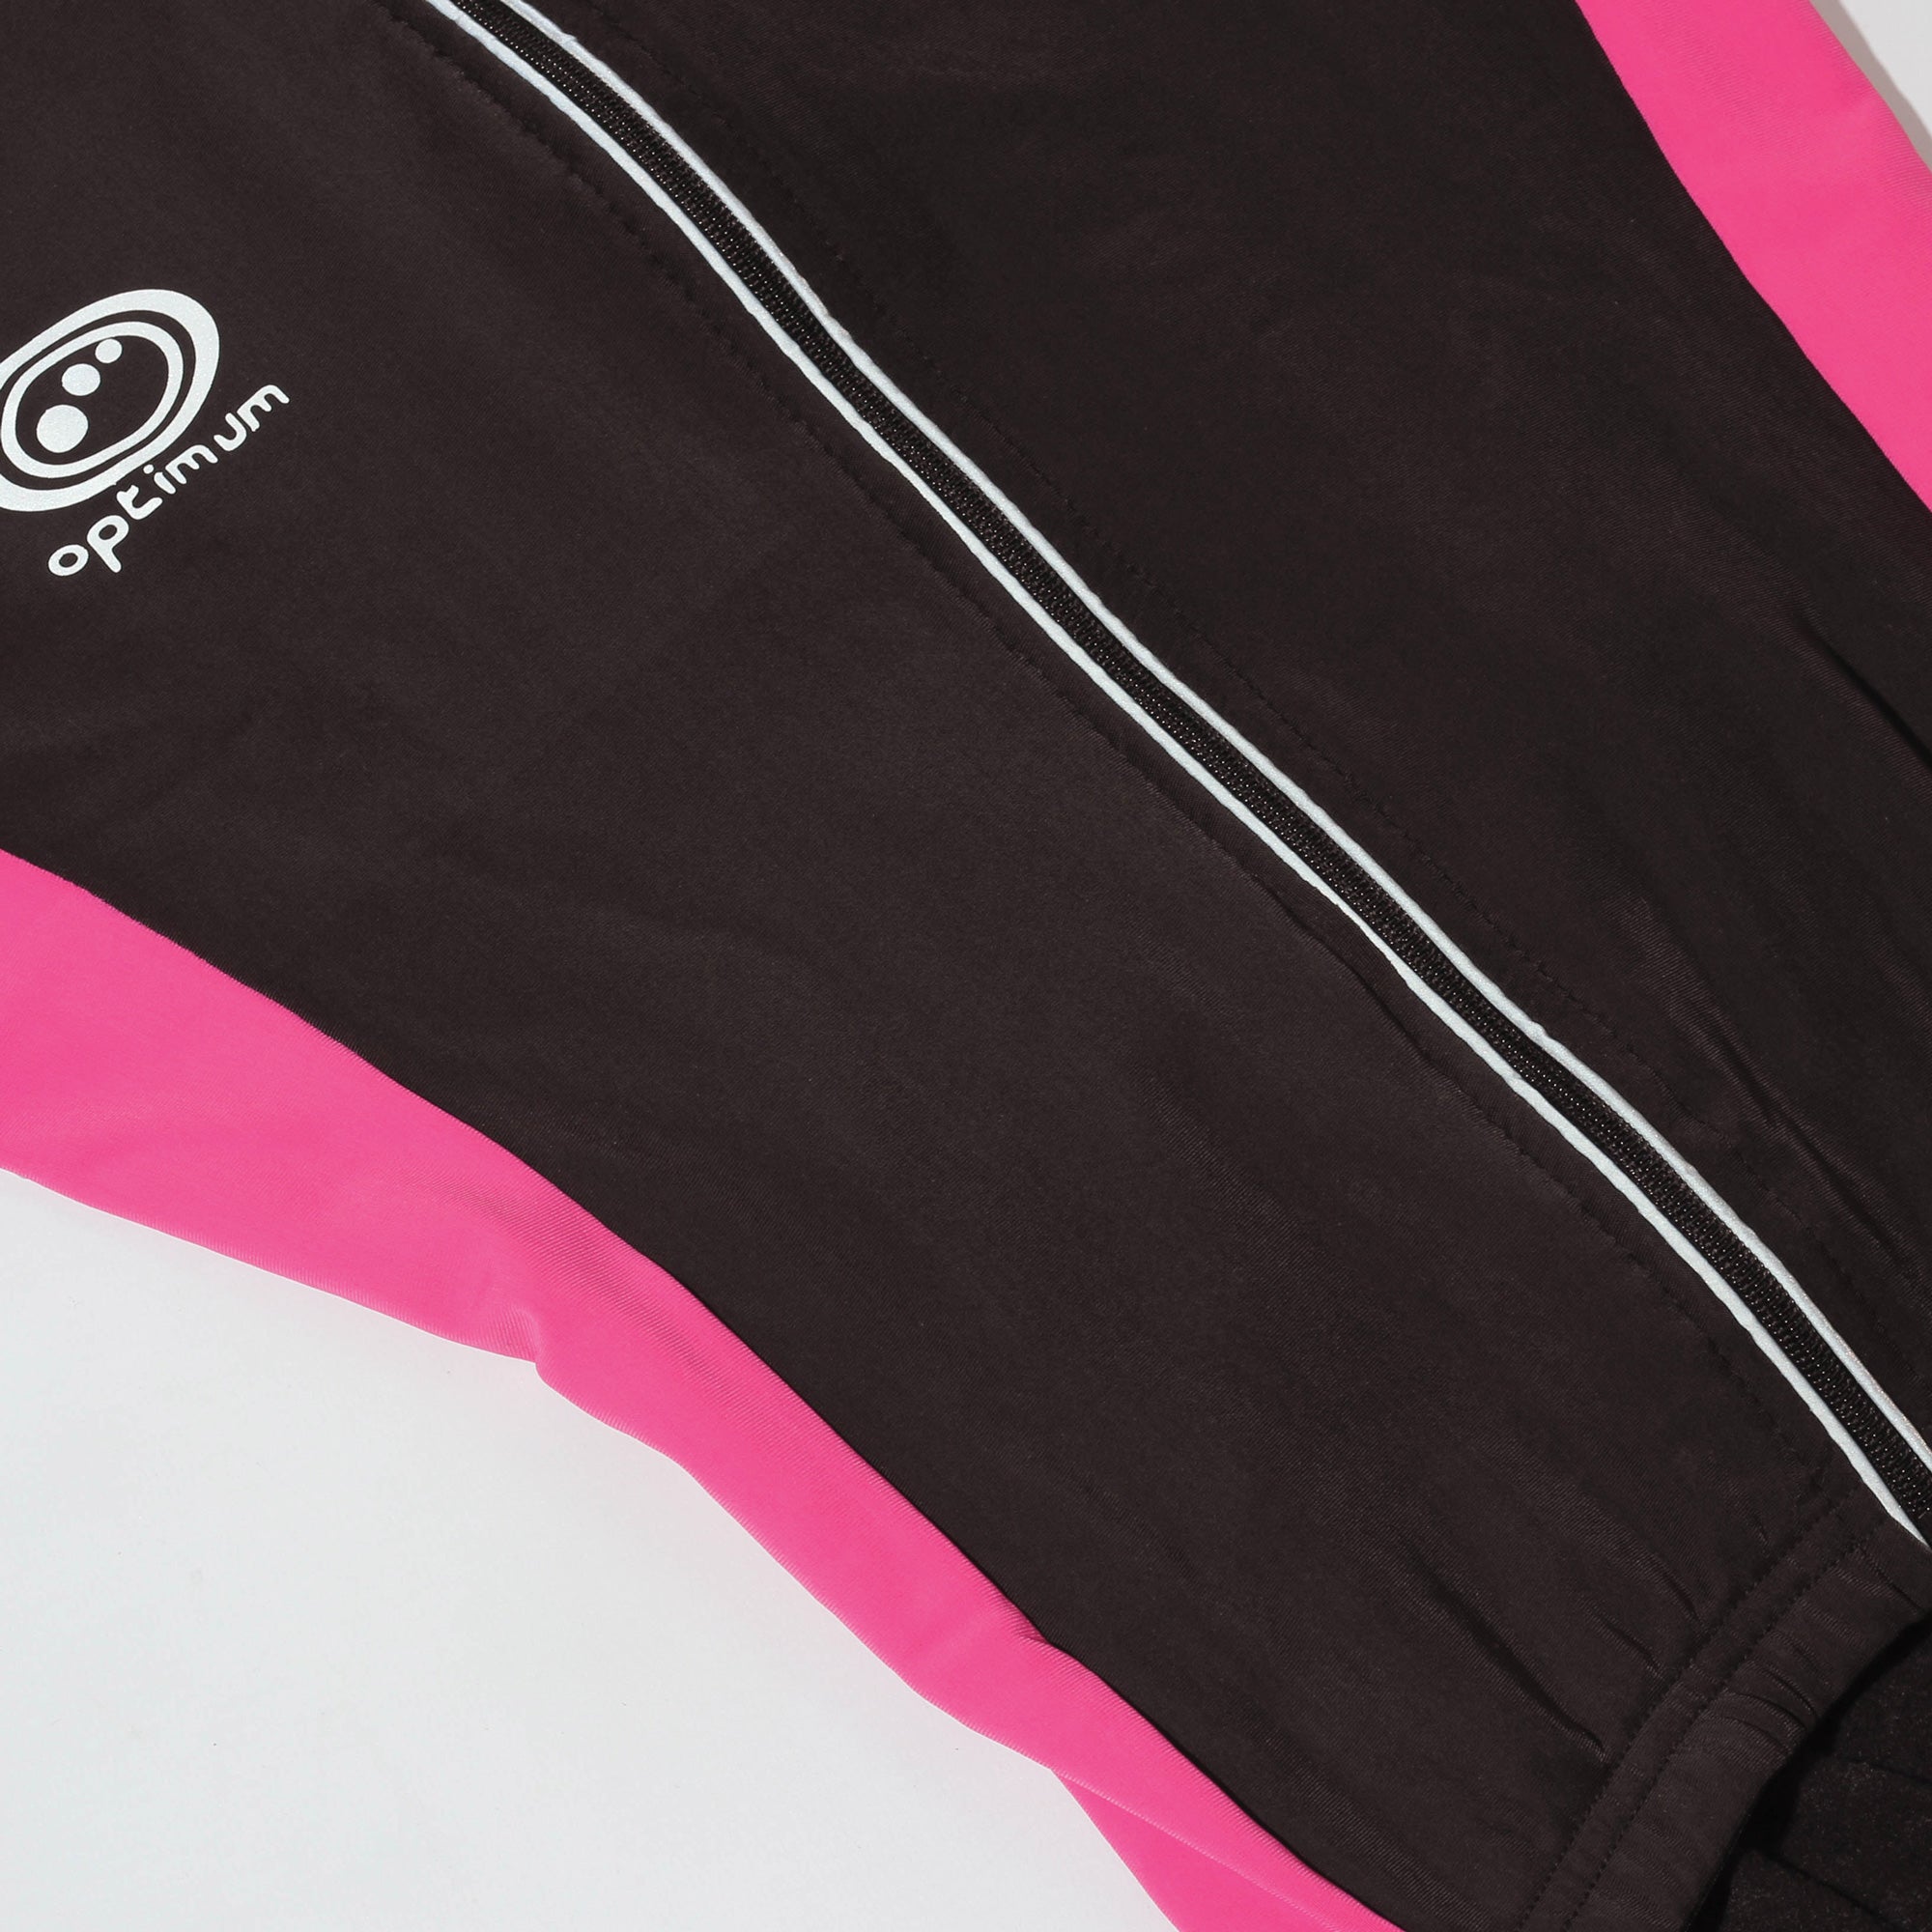 Nitebrite Roubaix Cycling Jacket Versatile Reflective Trim (Black/Pink) - Optimum